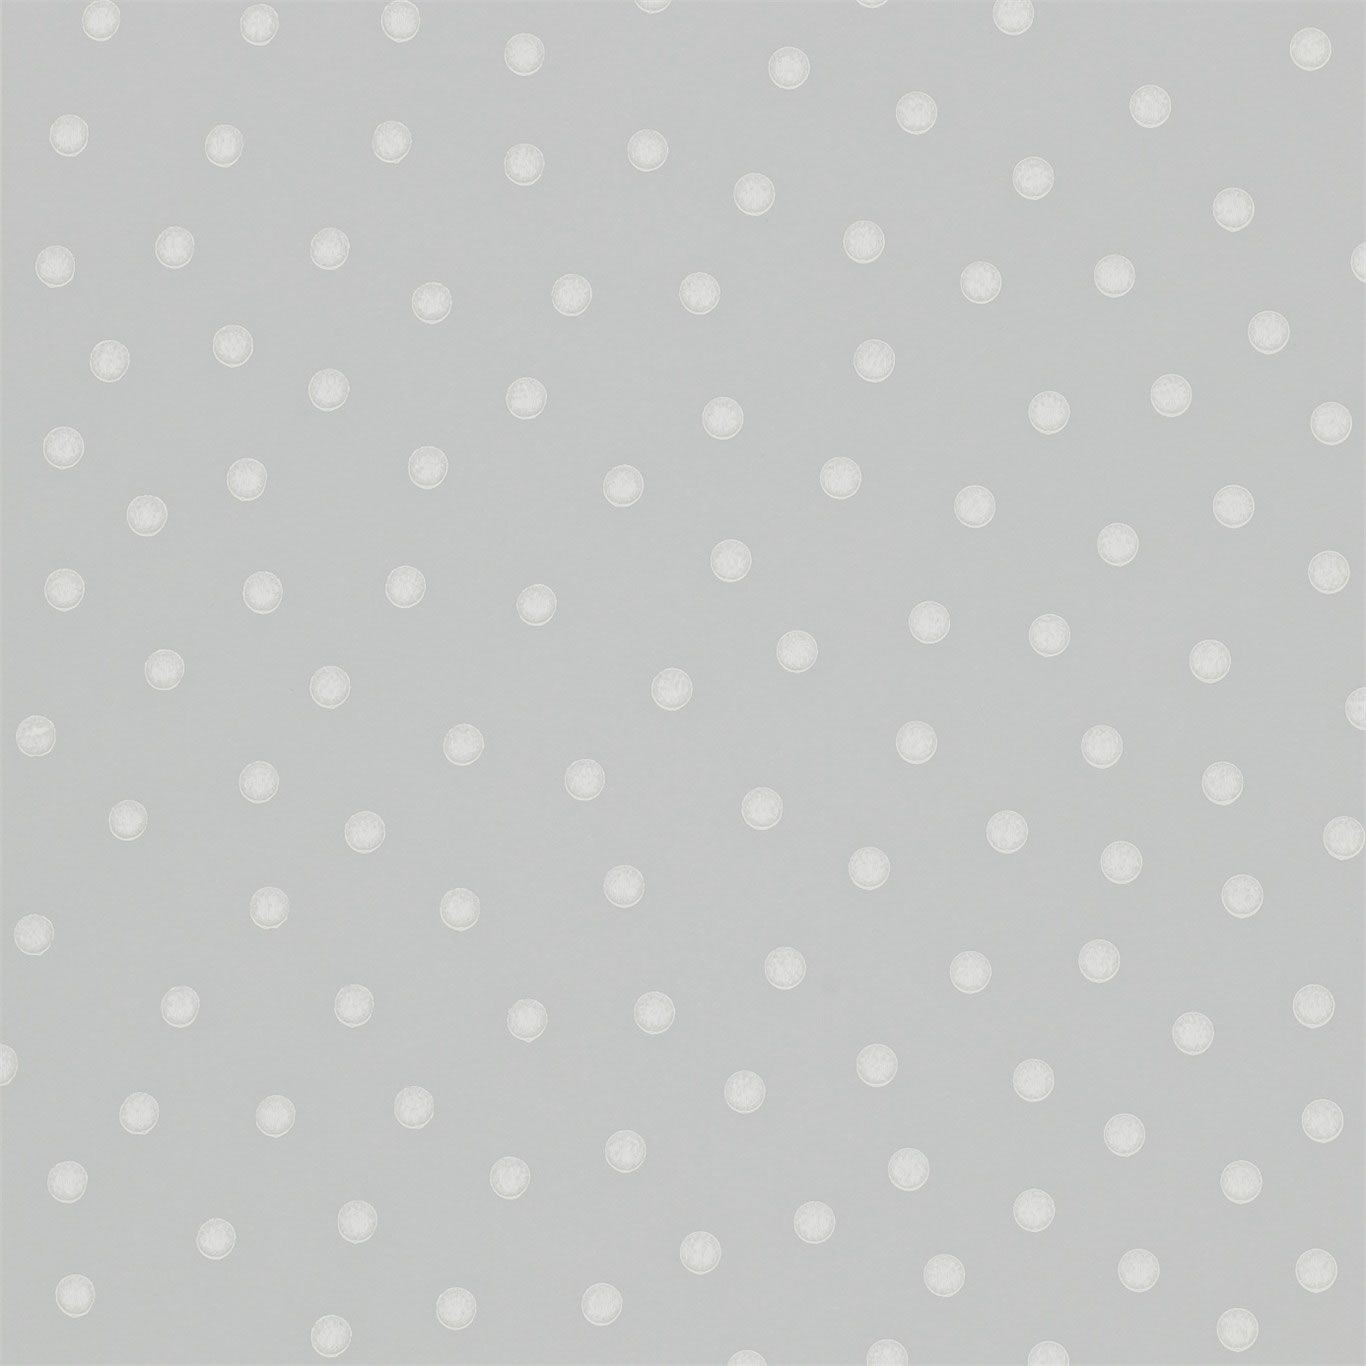  Grey Polka Dot Emma Bridgewater Sanderson Wallpaper